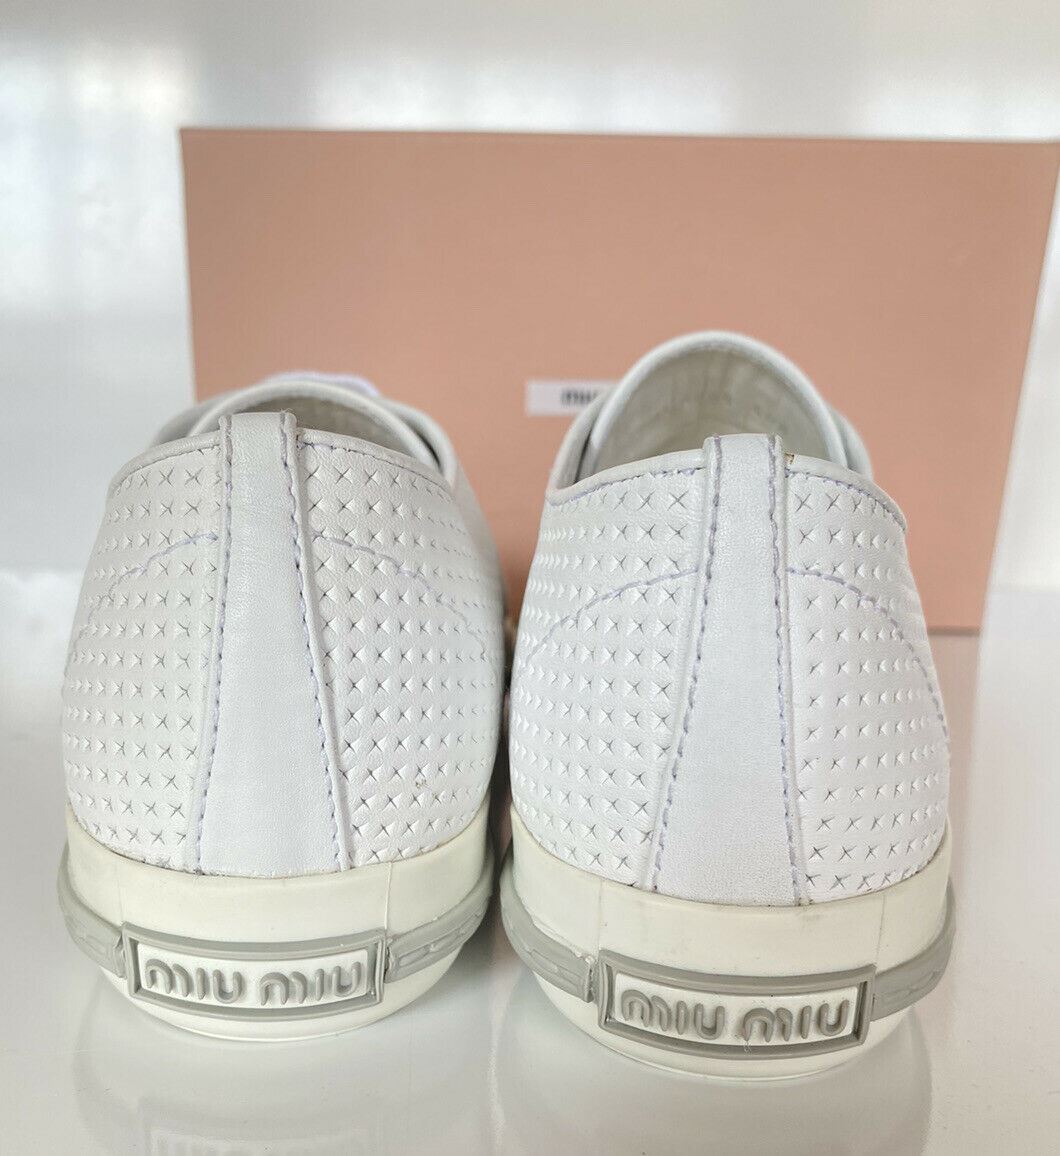 Miu Miu Perforated Jewel Embellished Cap Toe White Leather Sneakers 10.5 5E8558